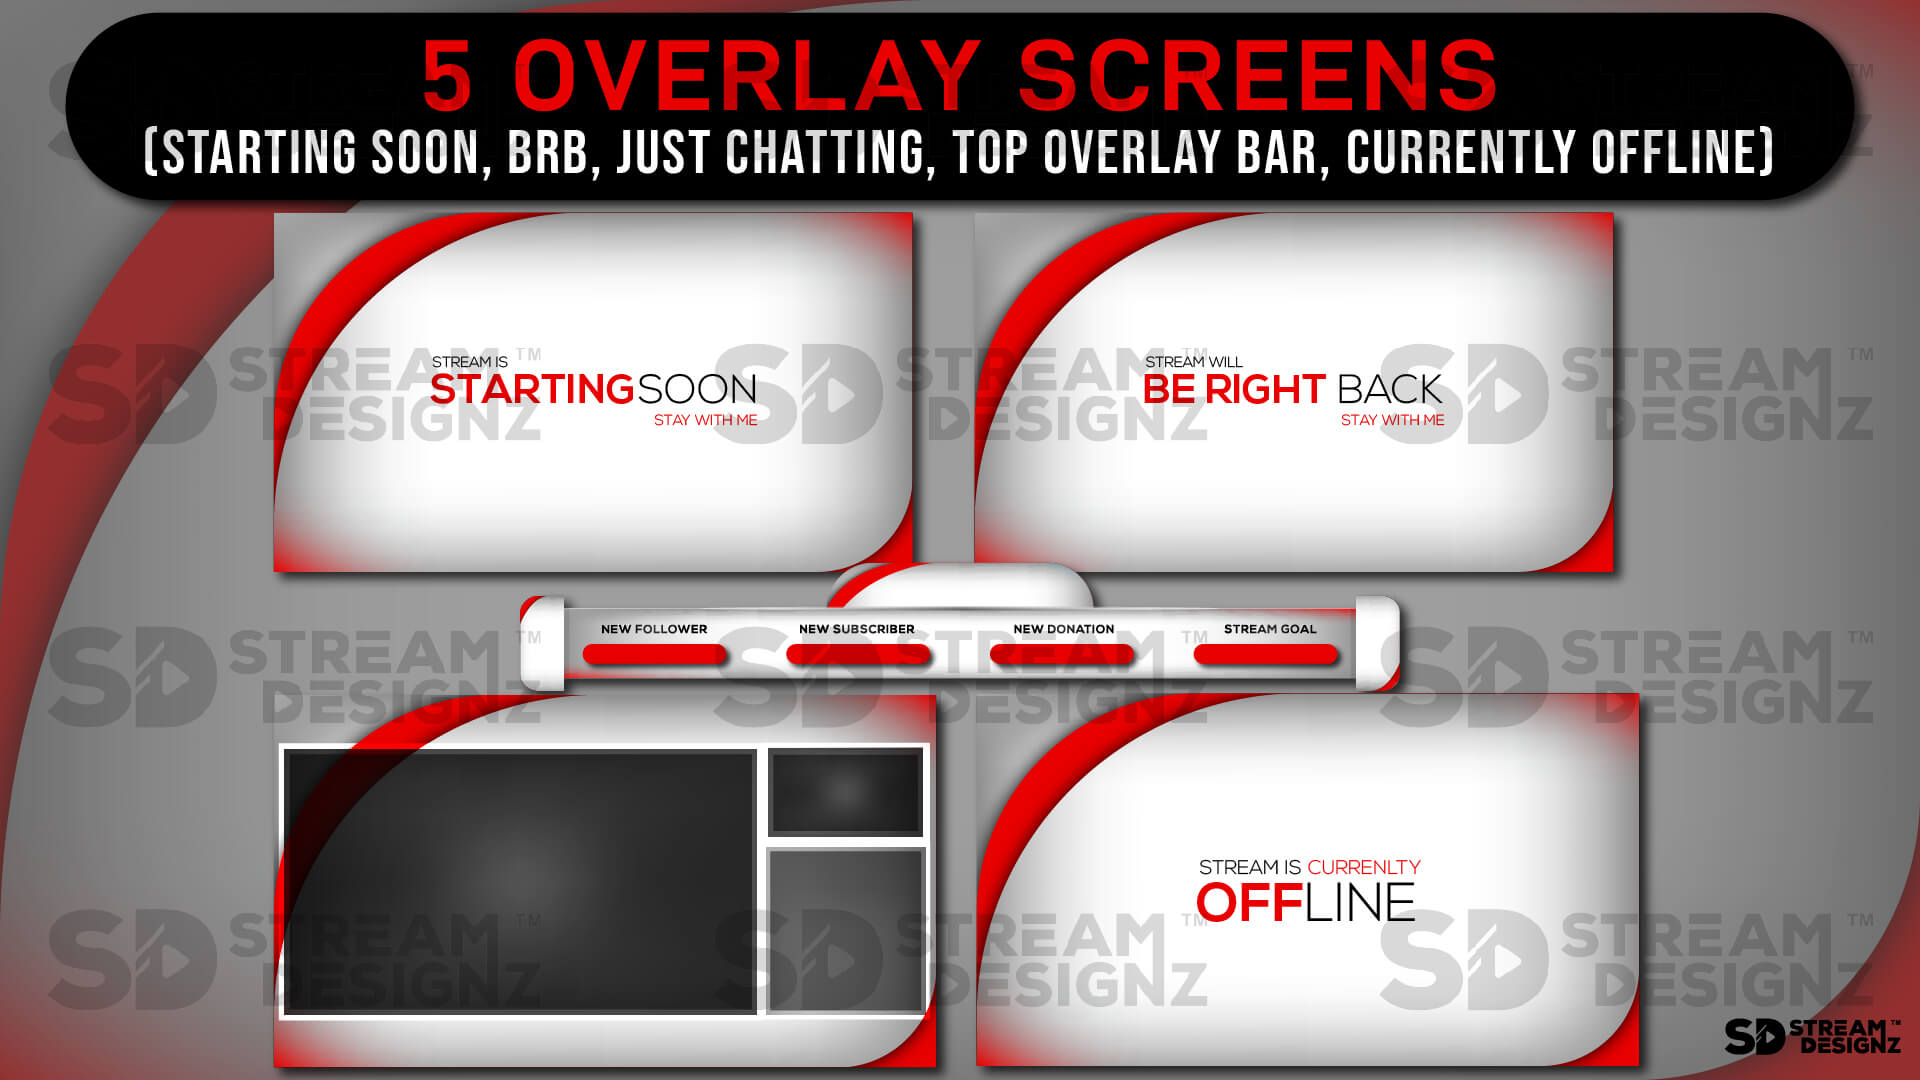 static Stream Overlay Package - Arctic Red & White - 5 overlay screens Stream Designz